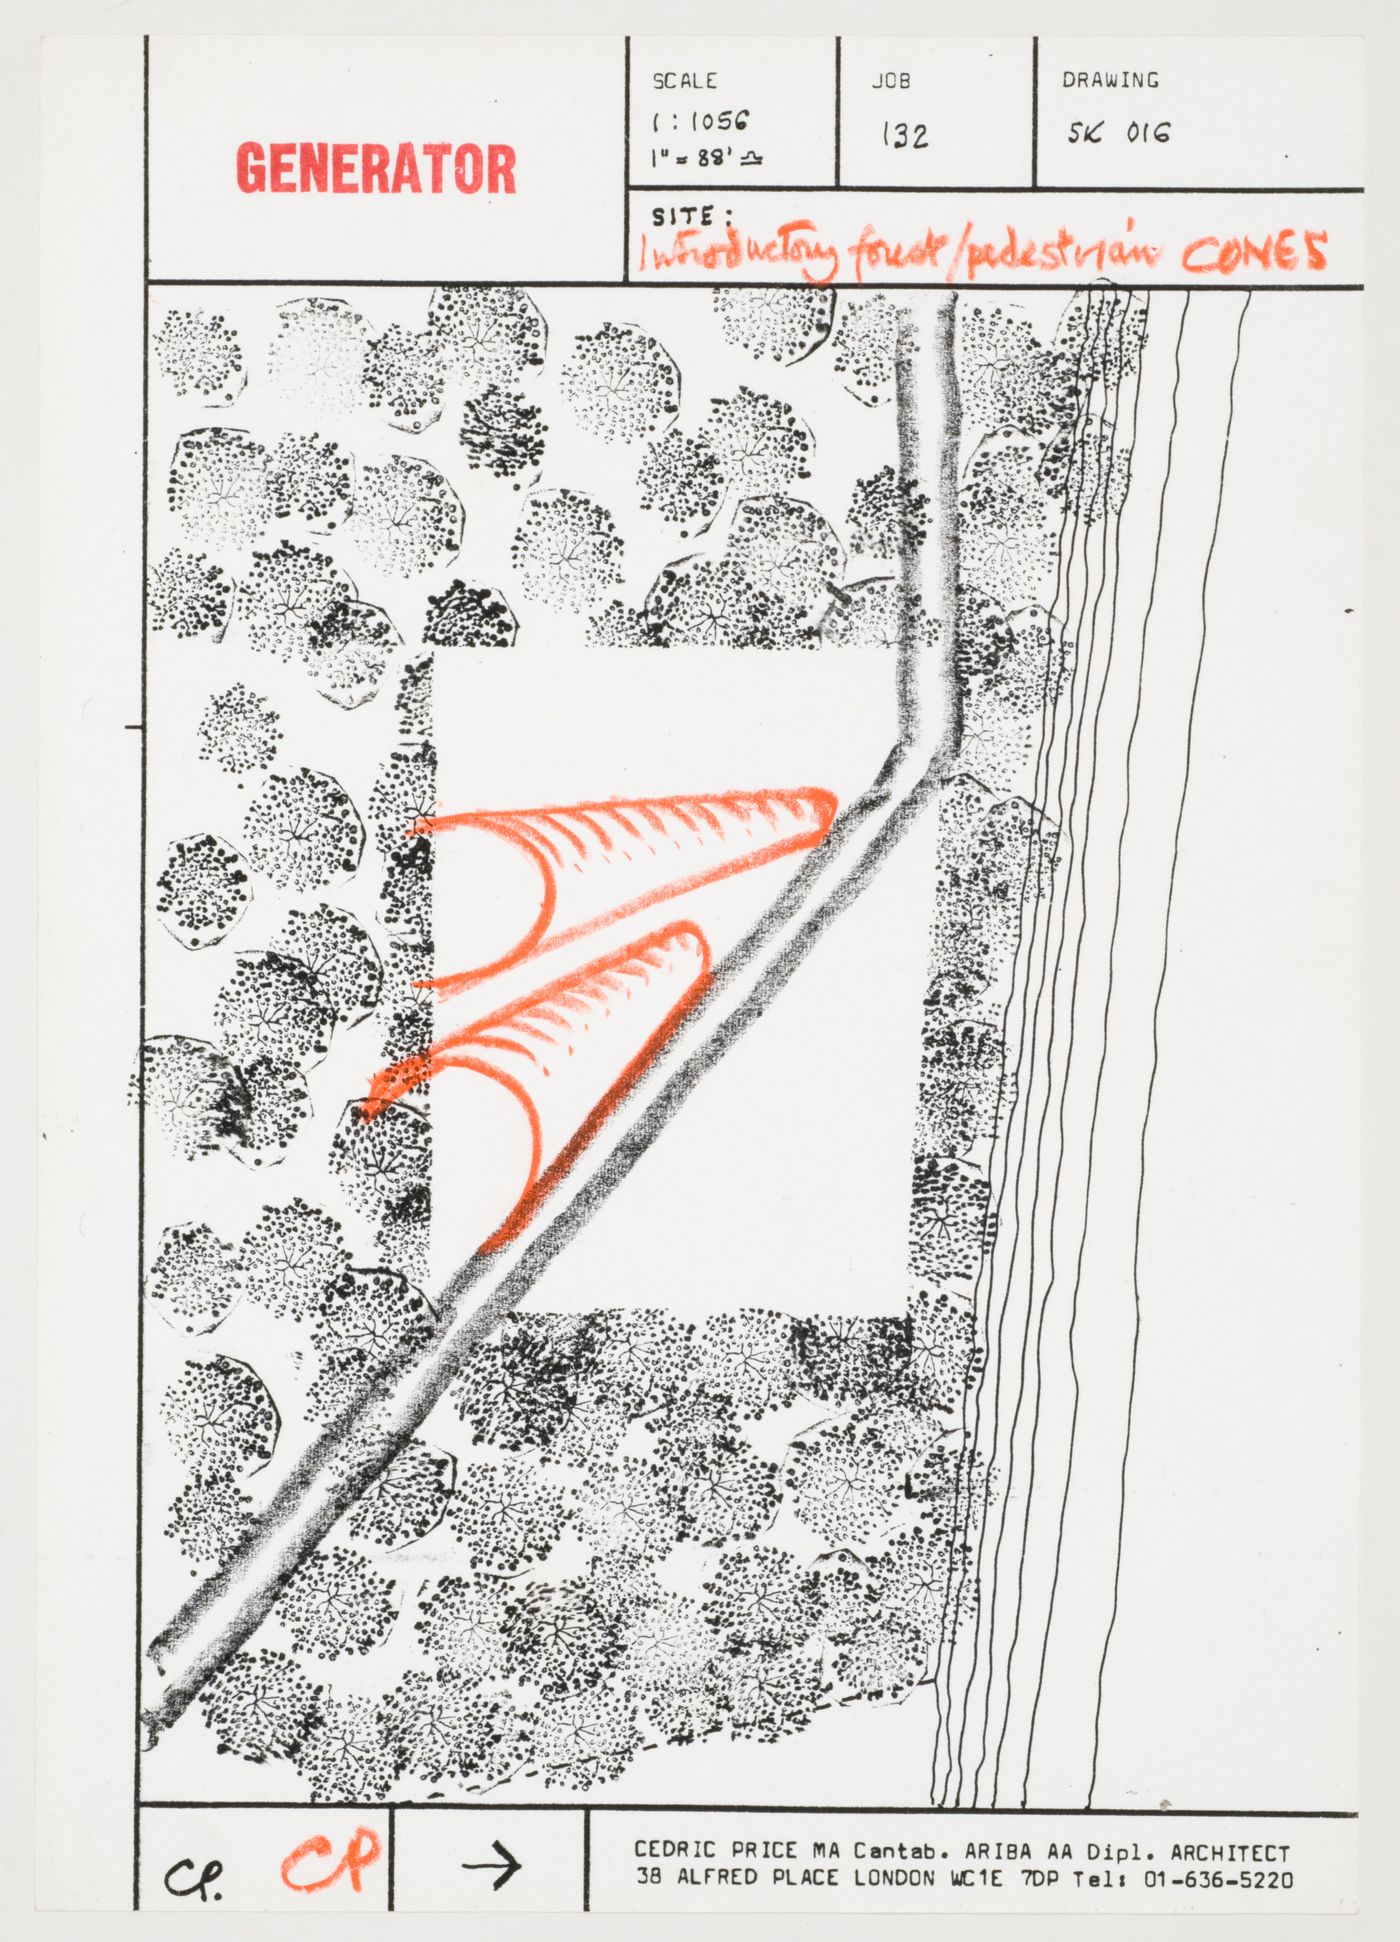 Perspective sketch of pedestrian cones, Generator